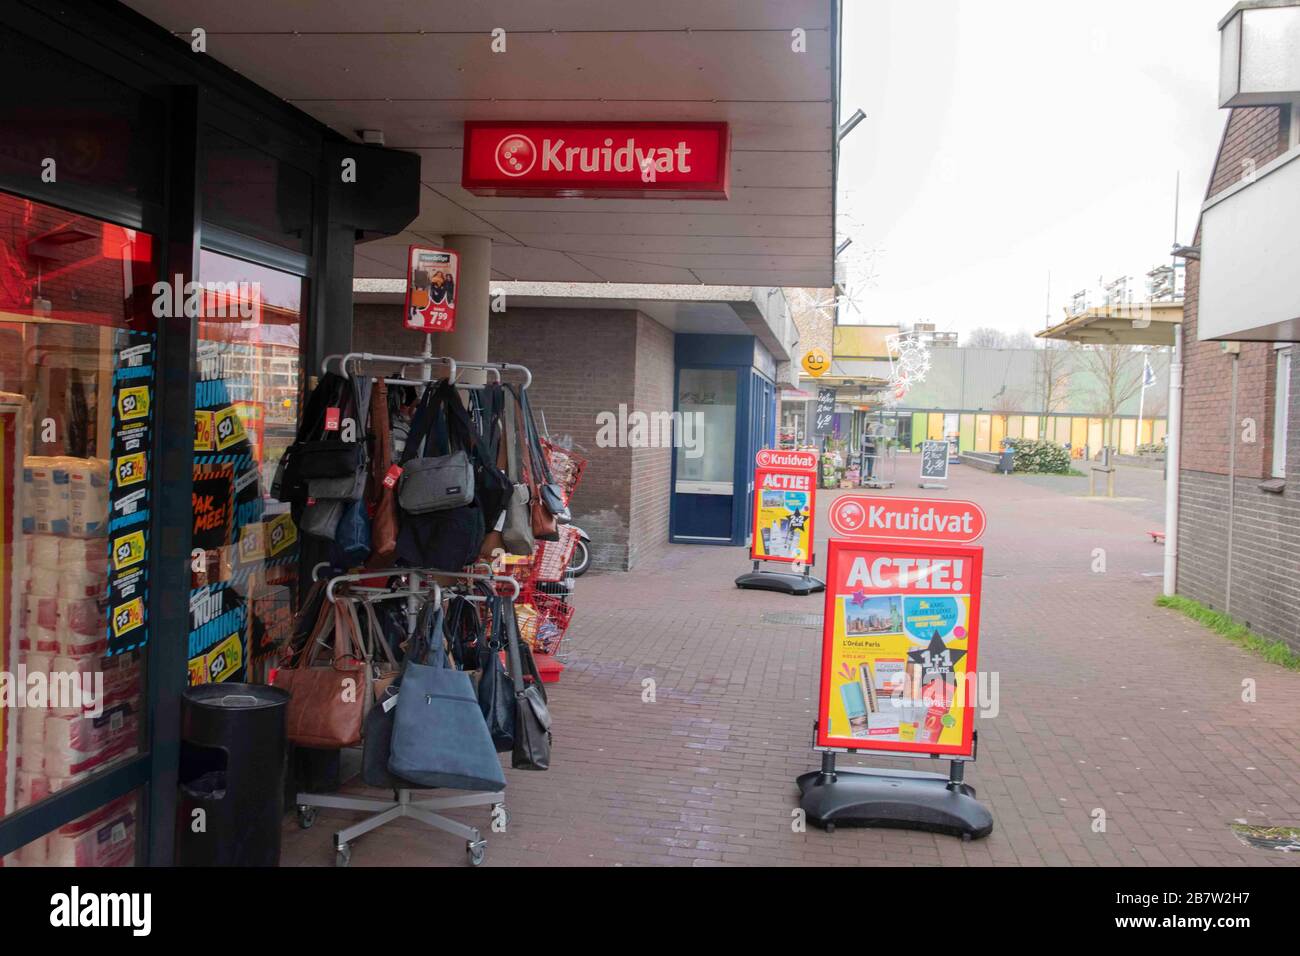 Kruidvat Shop At Duivendrecht The Netherlands 2020 Stock Photo - Alamy